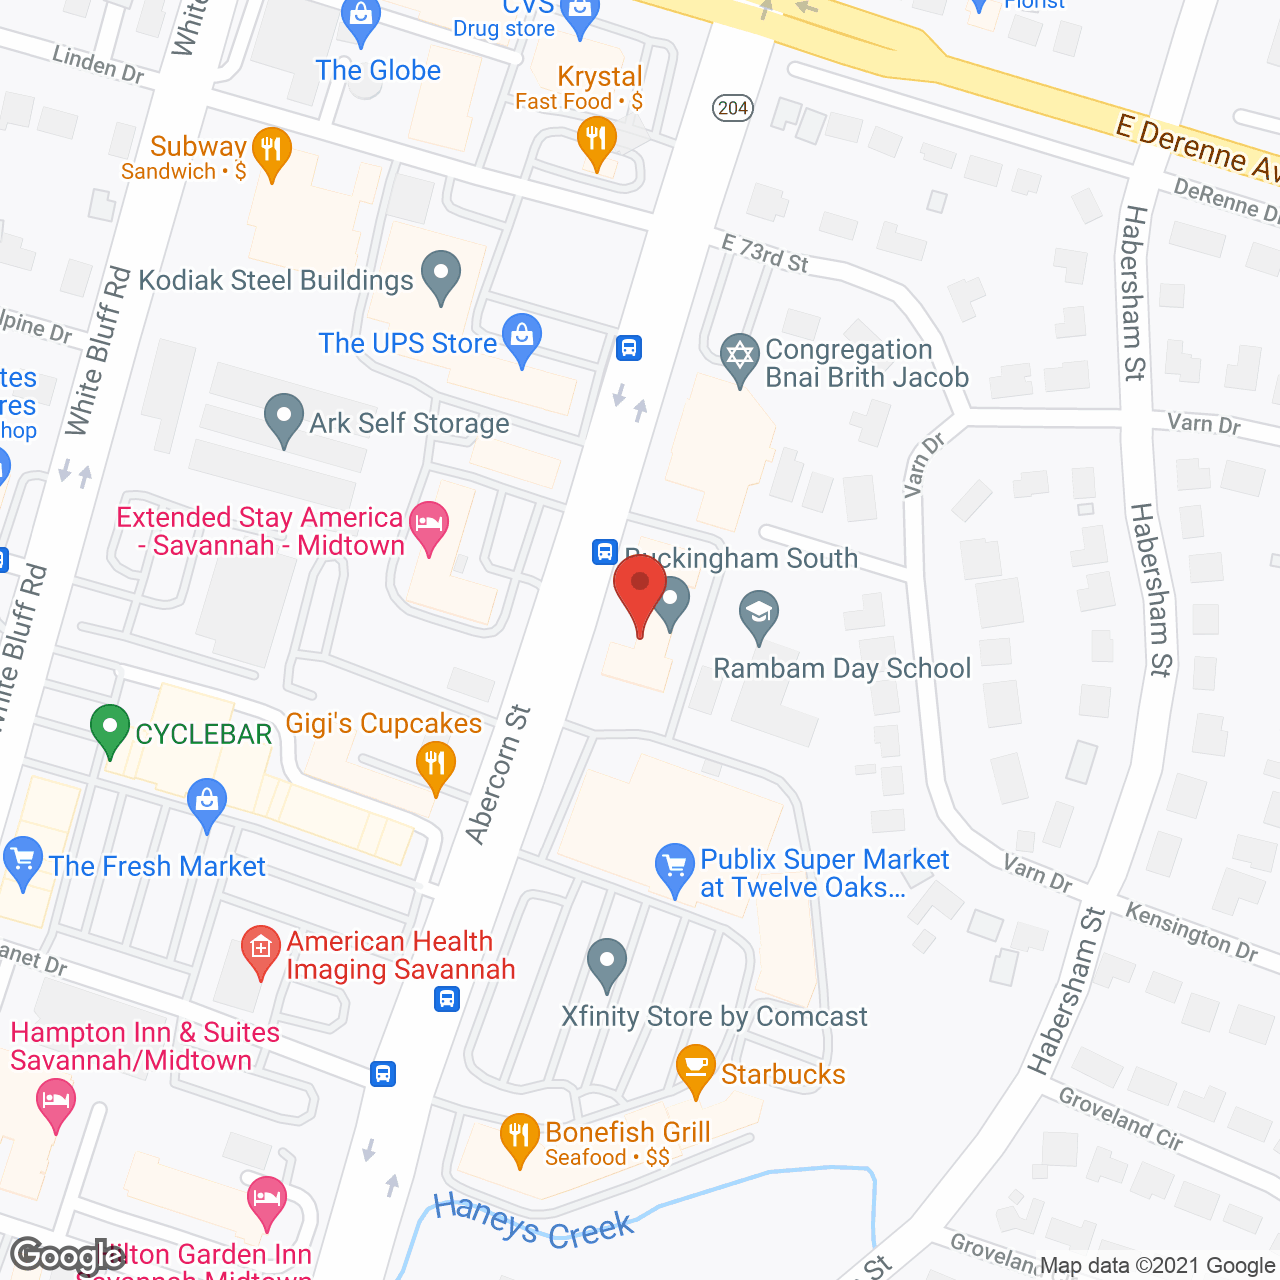 Buckingham South in google map